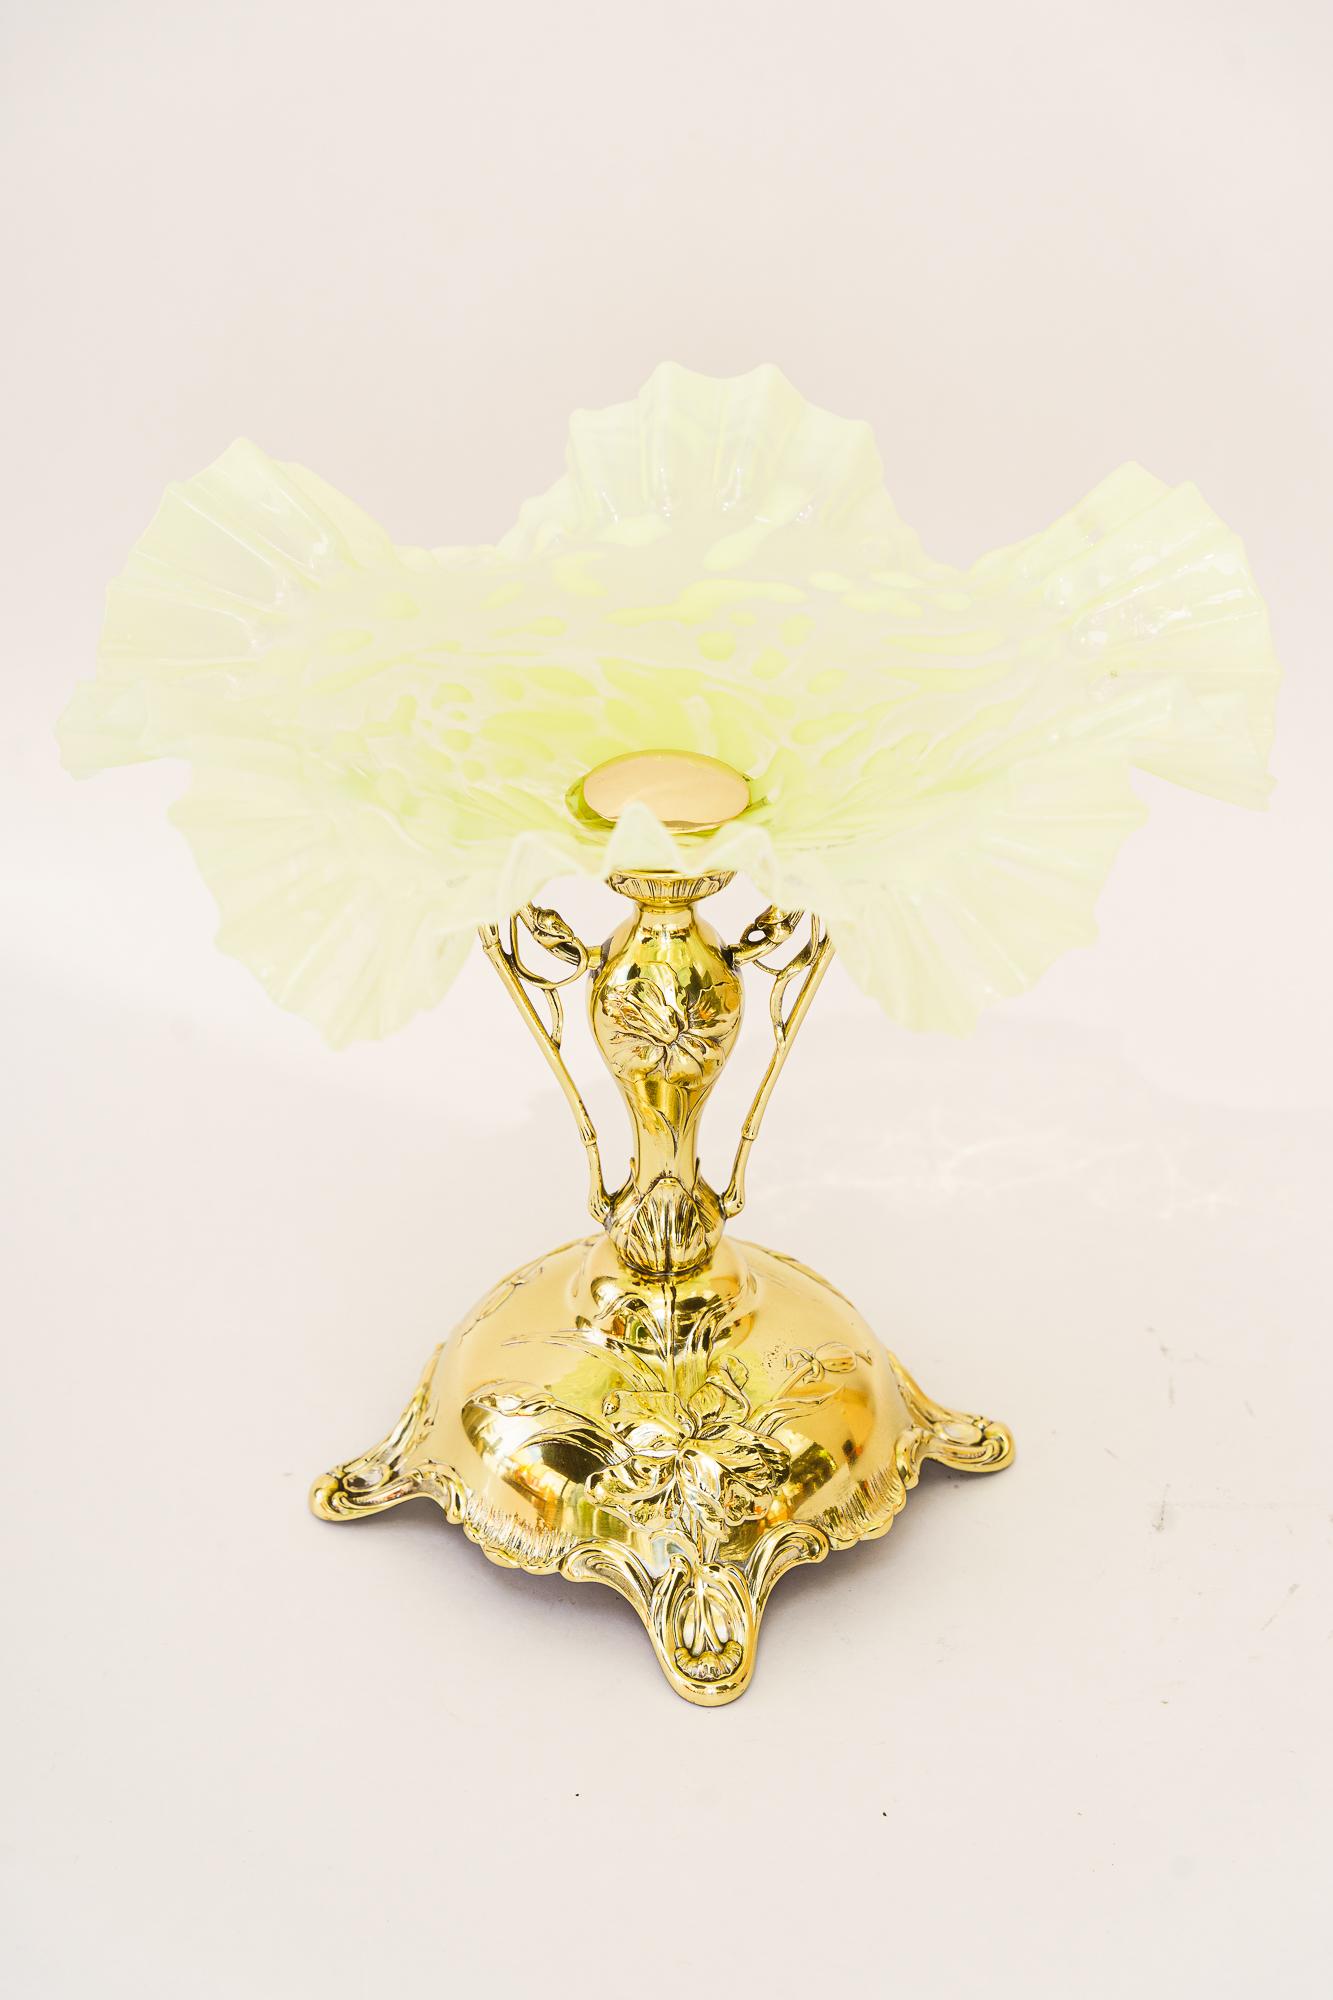 Floral jugendstil centerpiece with original opaline glass shade vienna 1908
Brass polished and stove enameled